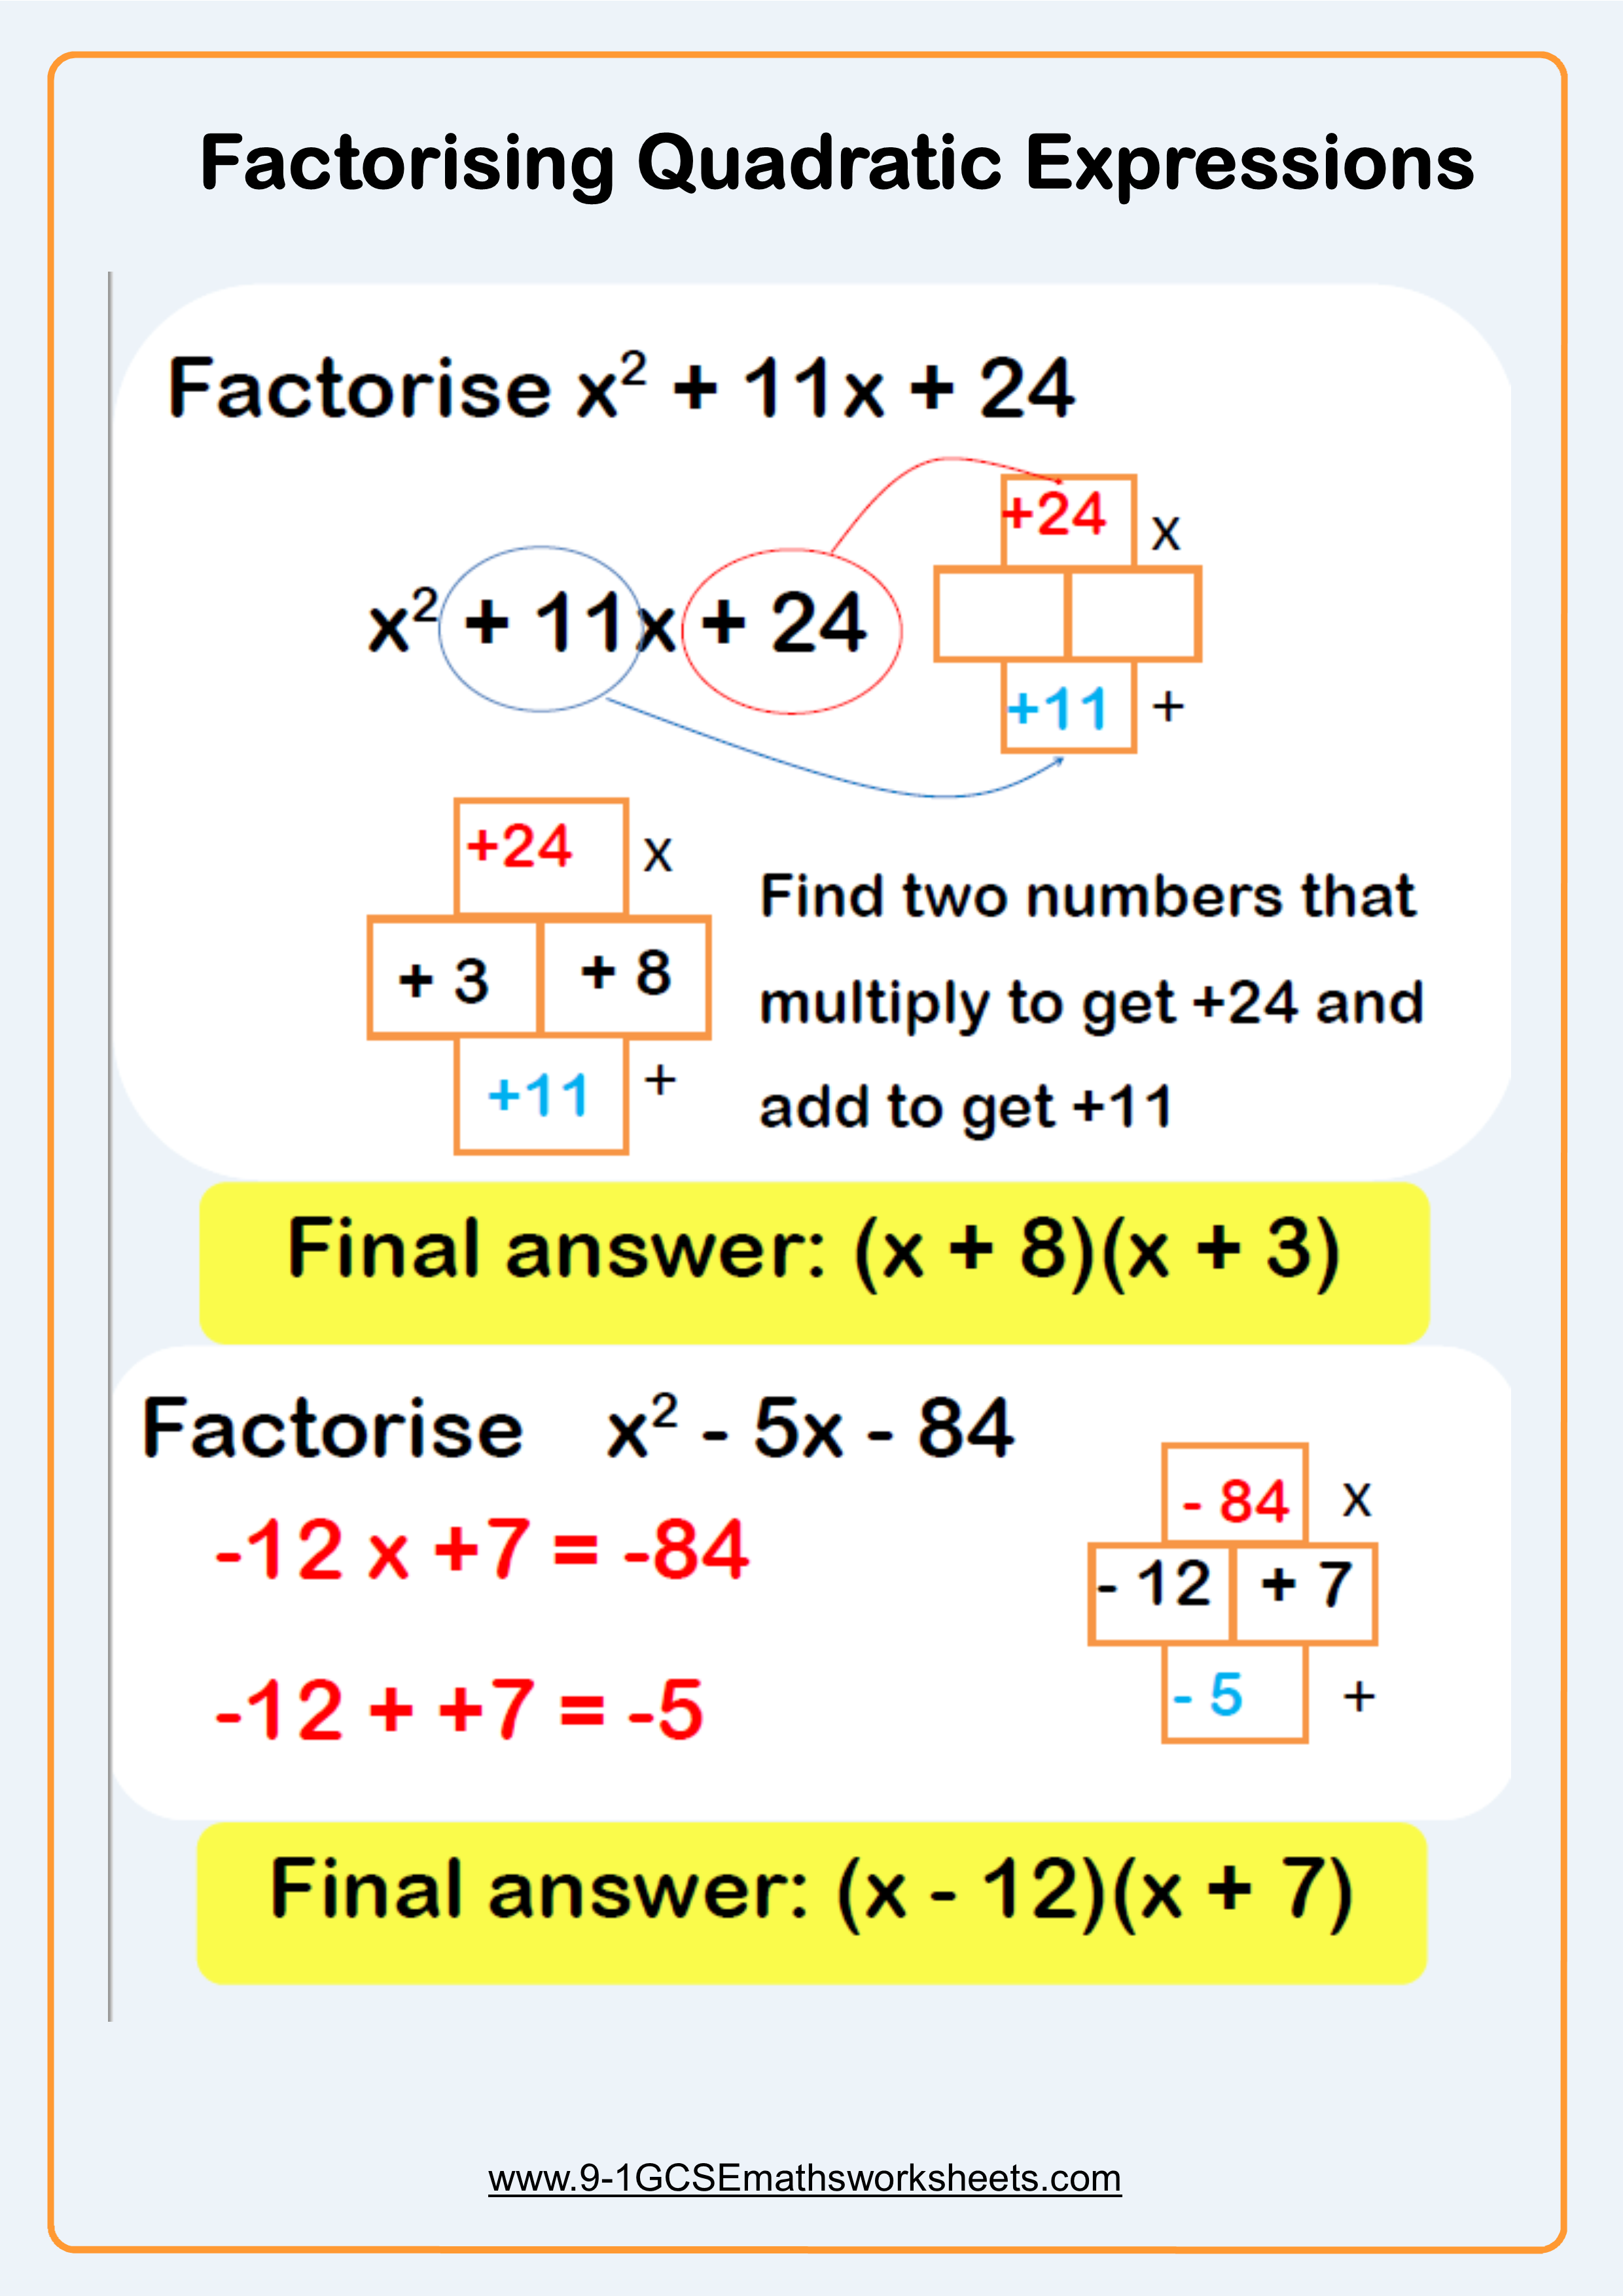 Factorising Quadratics Worksheets - New & Engaging  Cazoomy Within Factoring Quadratics Worksheet Answers